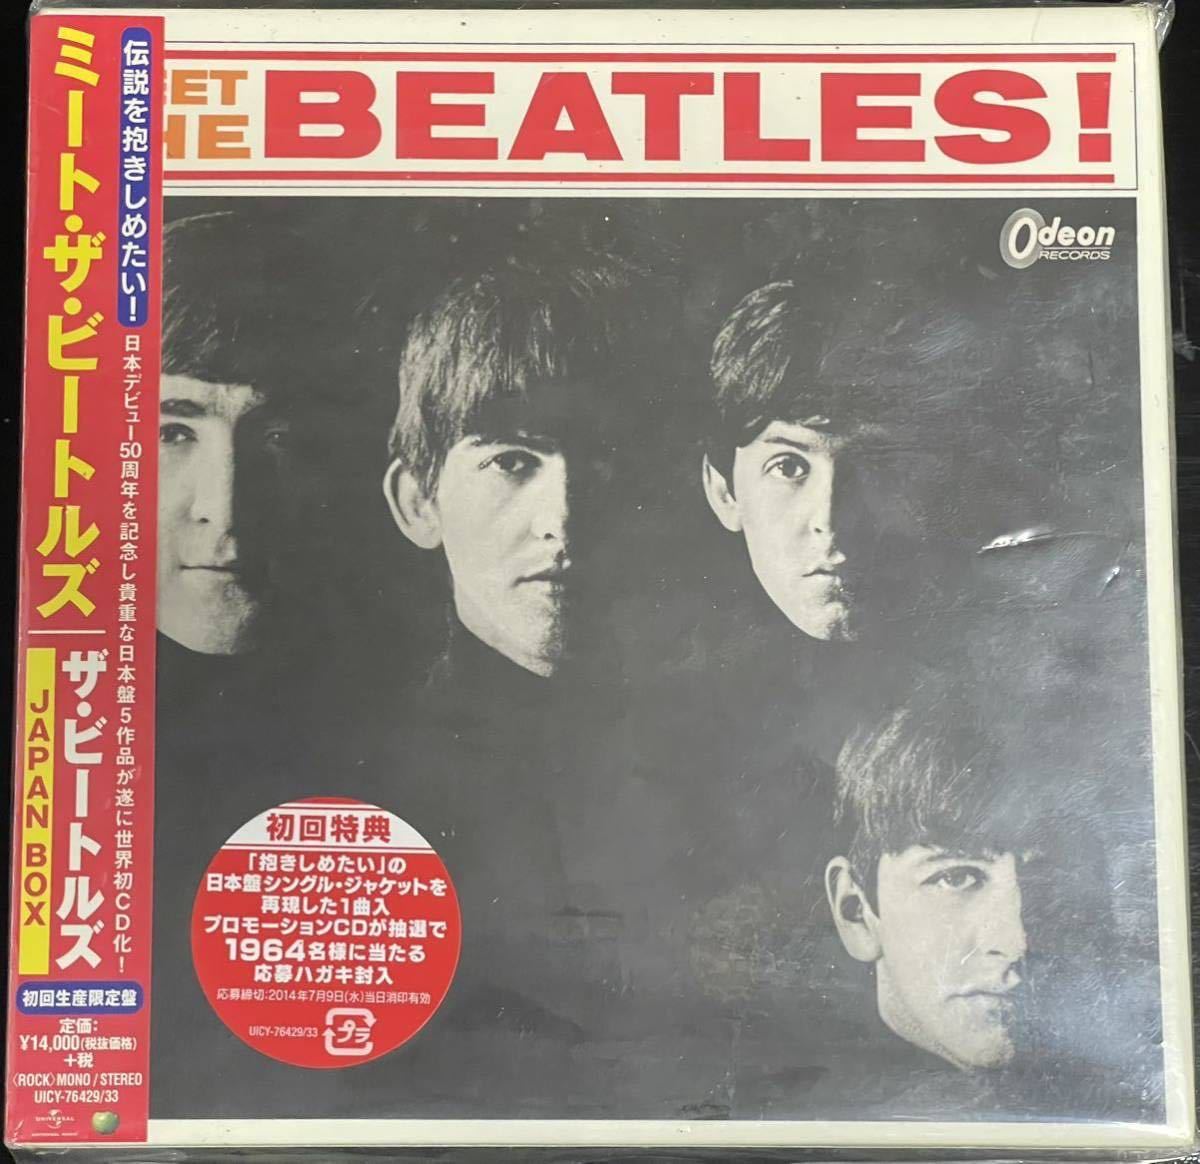 THE BEATLES】ミート・ザ・ビートルズ JAPAN BOX (初回生産限定盤)-